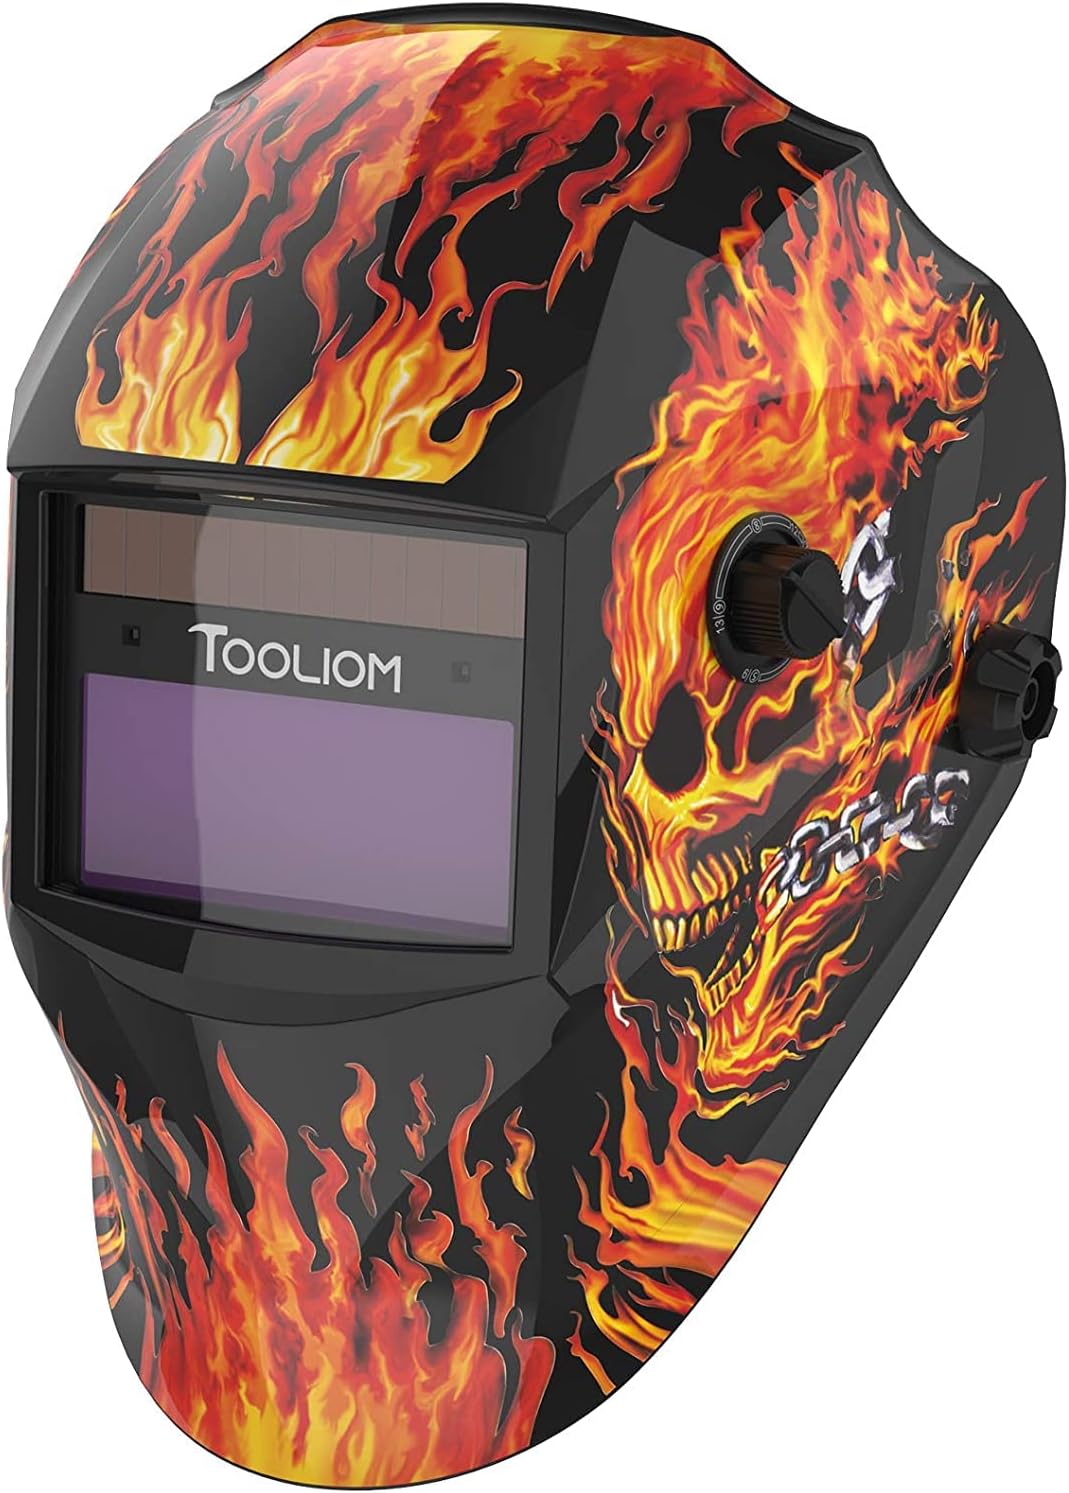 TOOLIOM Welding Helmet Auto Darkening Solar Powered with Adjustable Shade 4/9-13 for TIG MIG ARC Flaming Skull Design Welder Ma